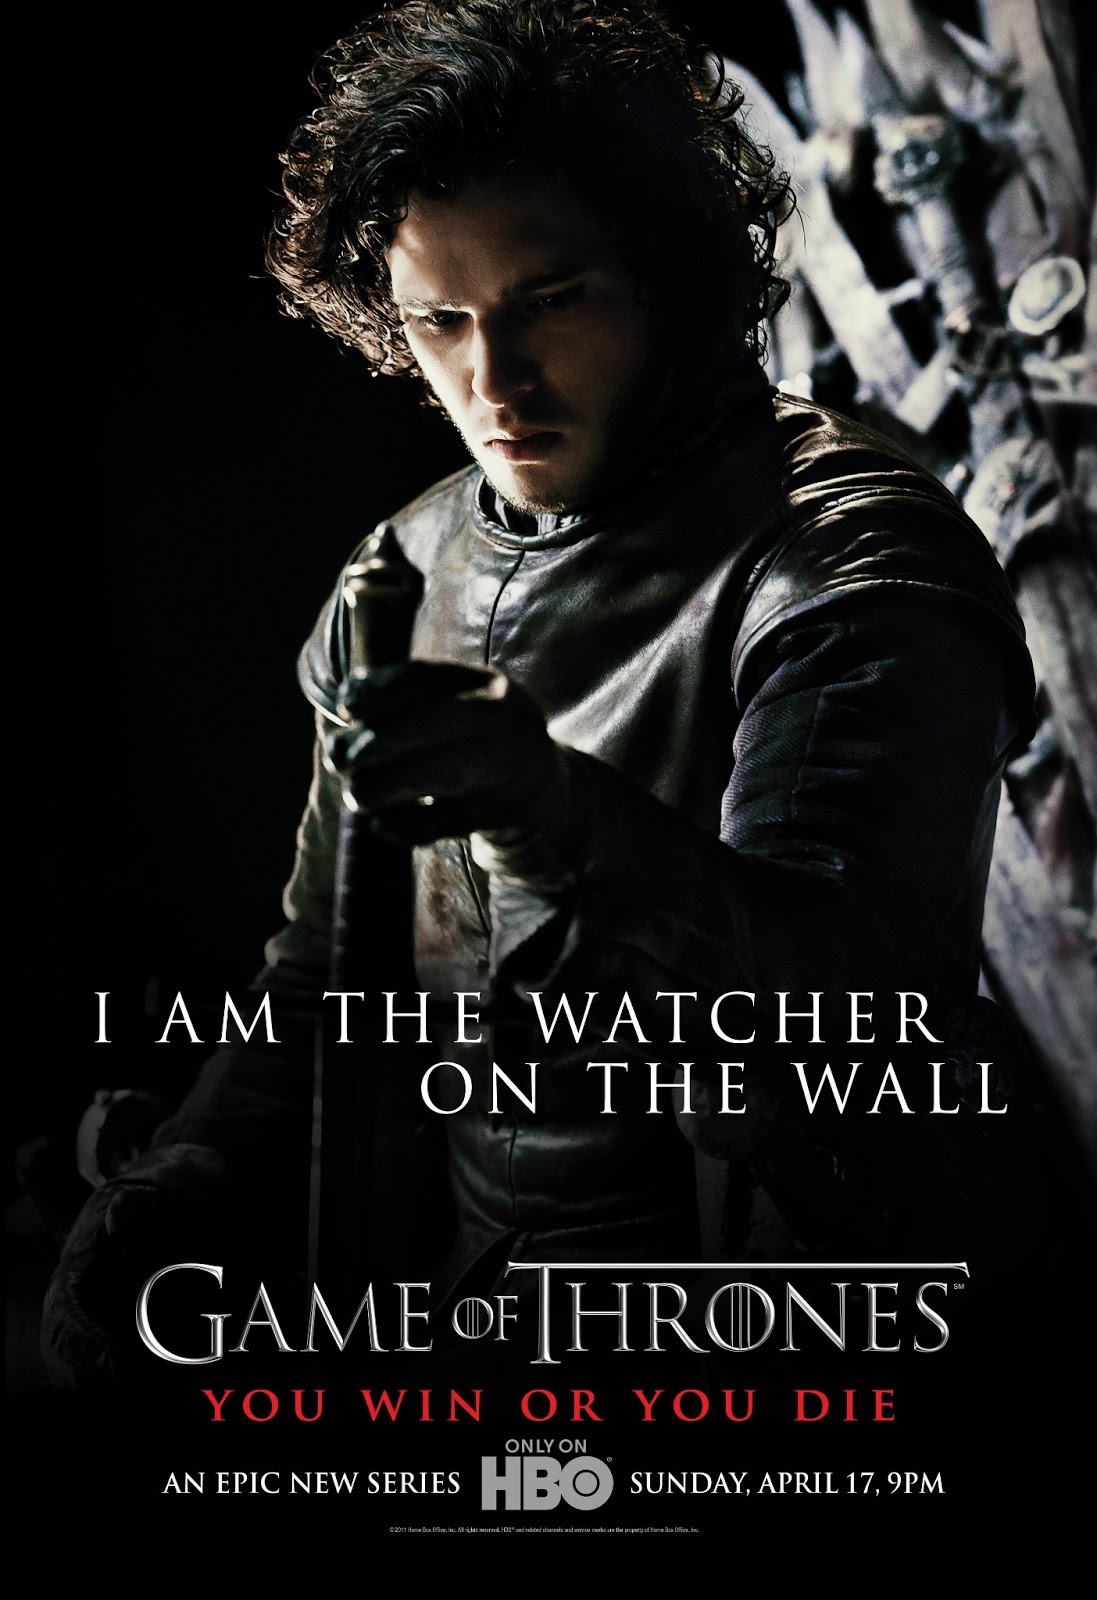 Kit Harington as Jon Snow: Game of Thrones